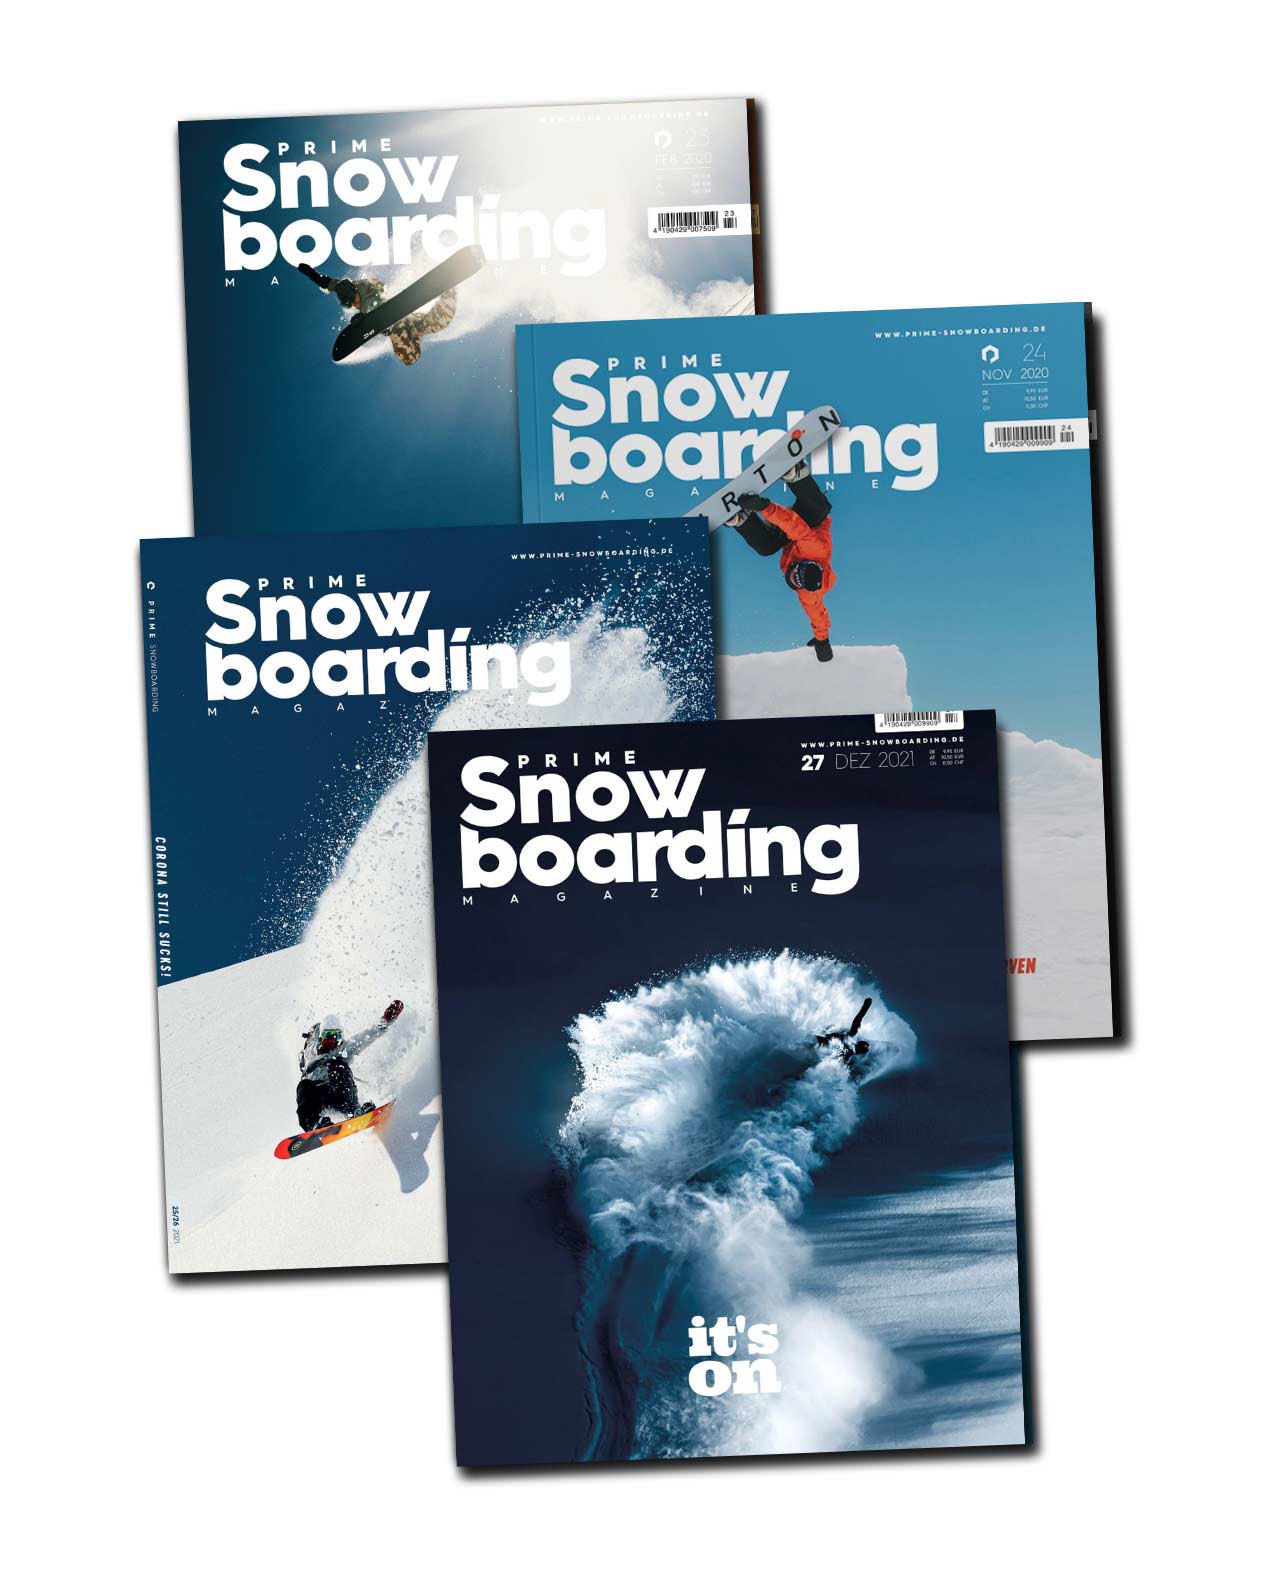 PRIME Snowboarding Magazine Abo